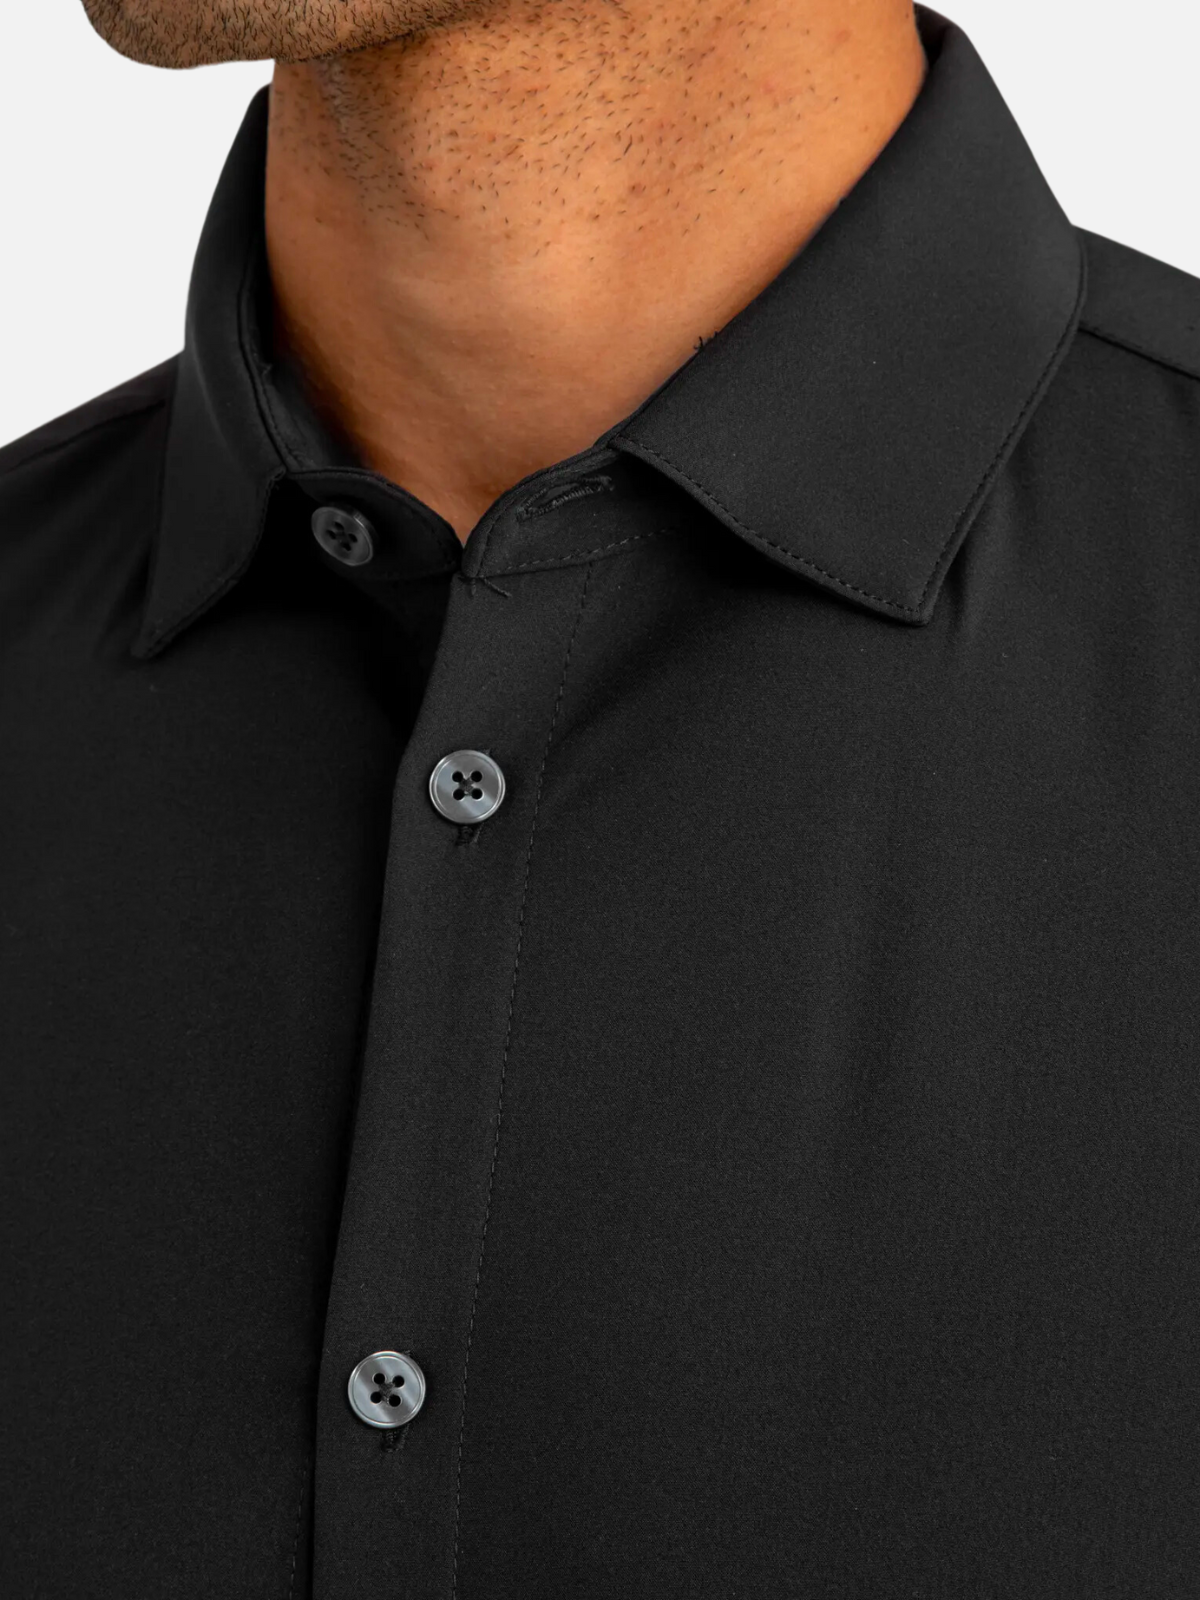 mizzen + main leeward ls long sleeve dress shirt performance material polyester spandex wrinkle resistant black solid kempt athens ga georgia men's clothing store